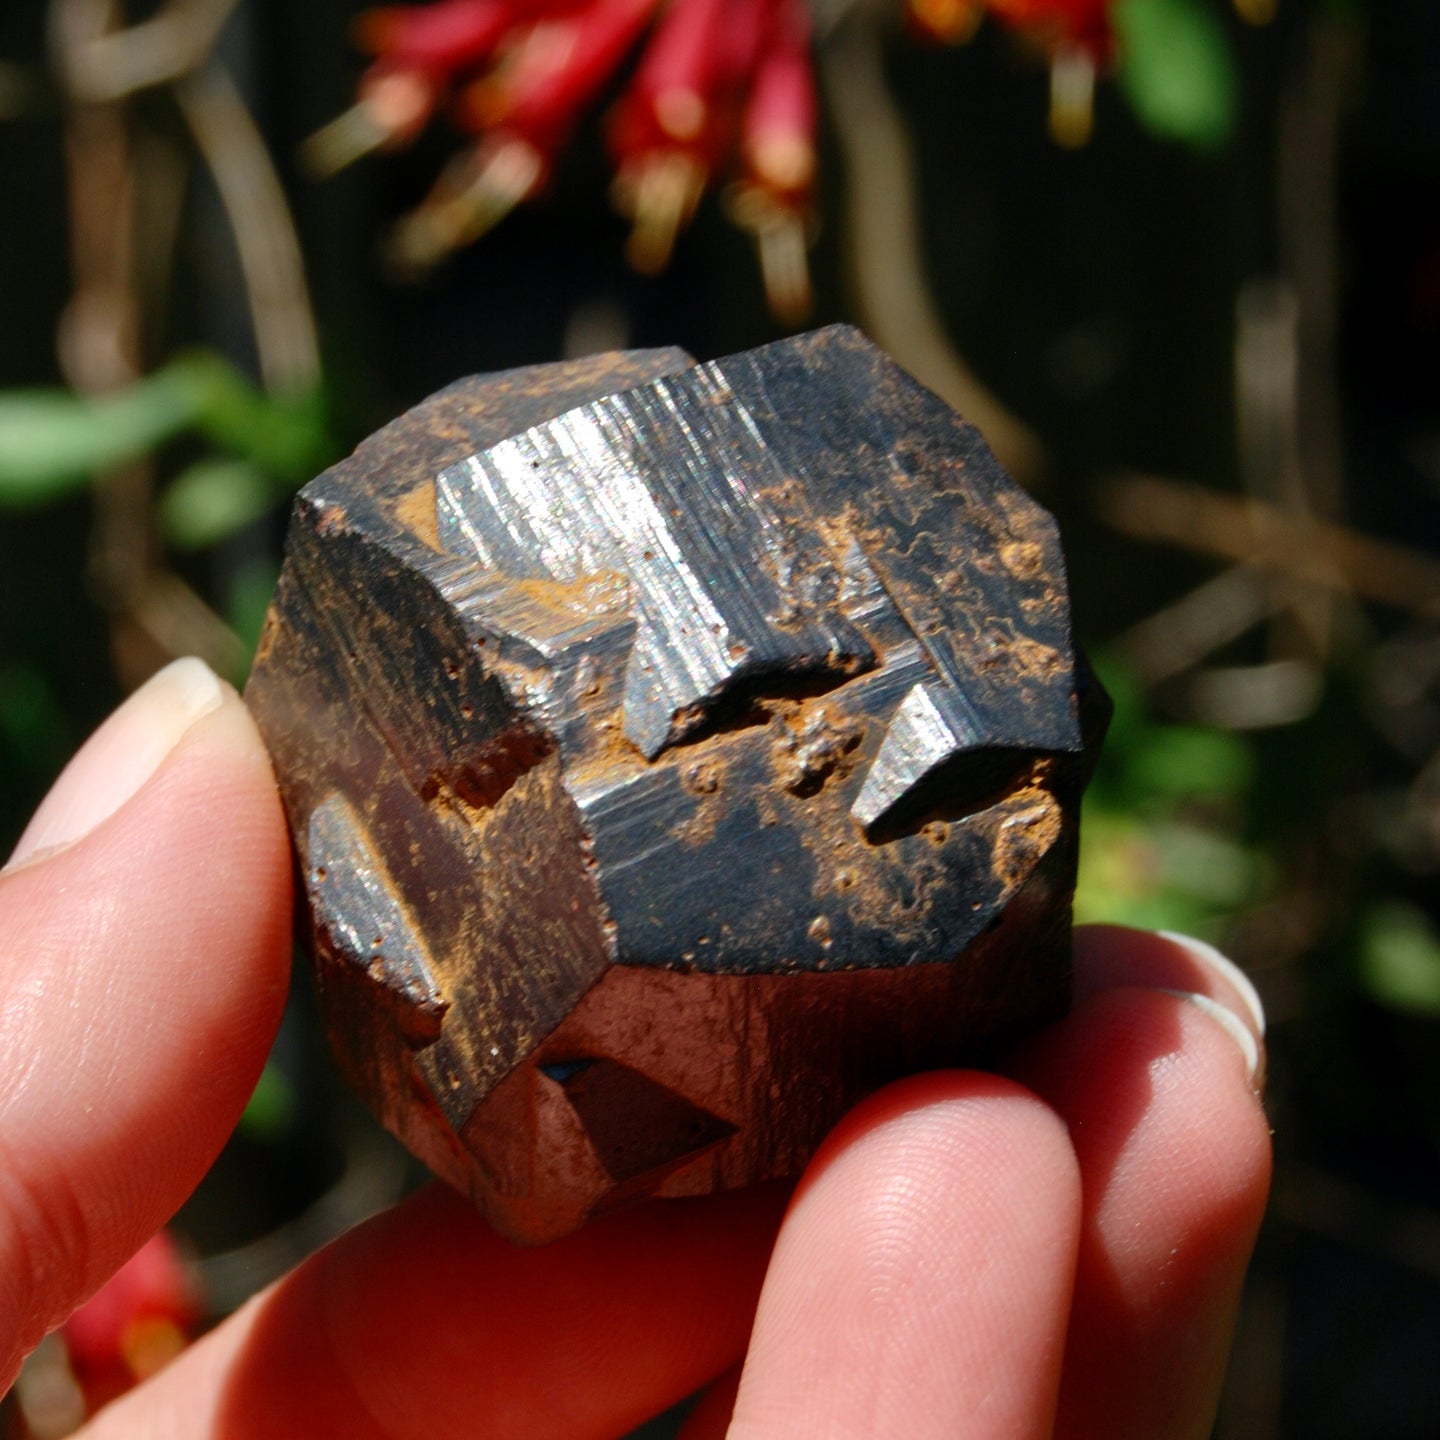 Pyrite Iron Cross Twin Goethite Pseudomorph Crystal